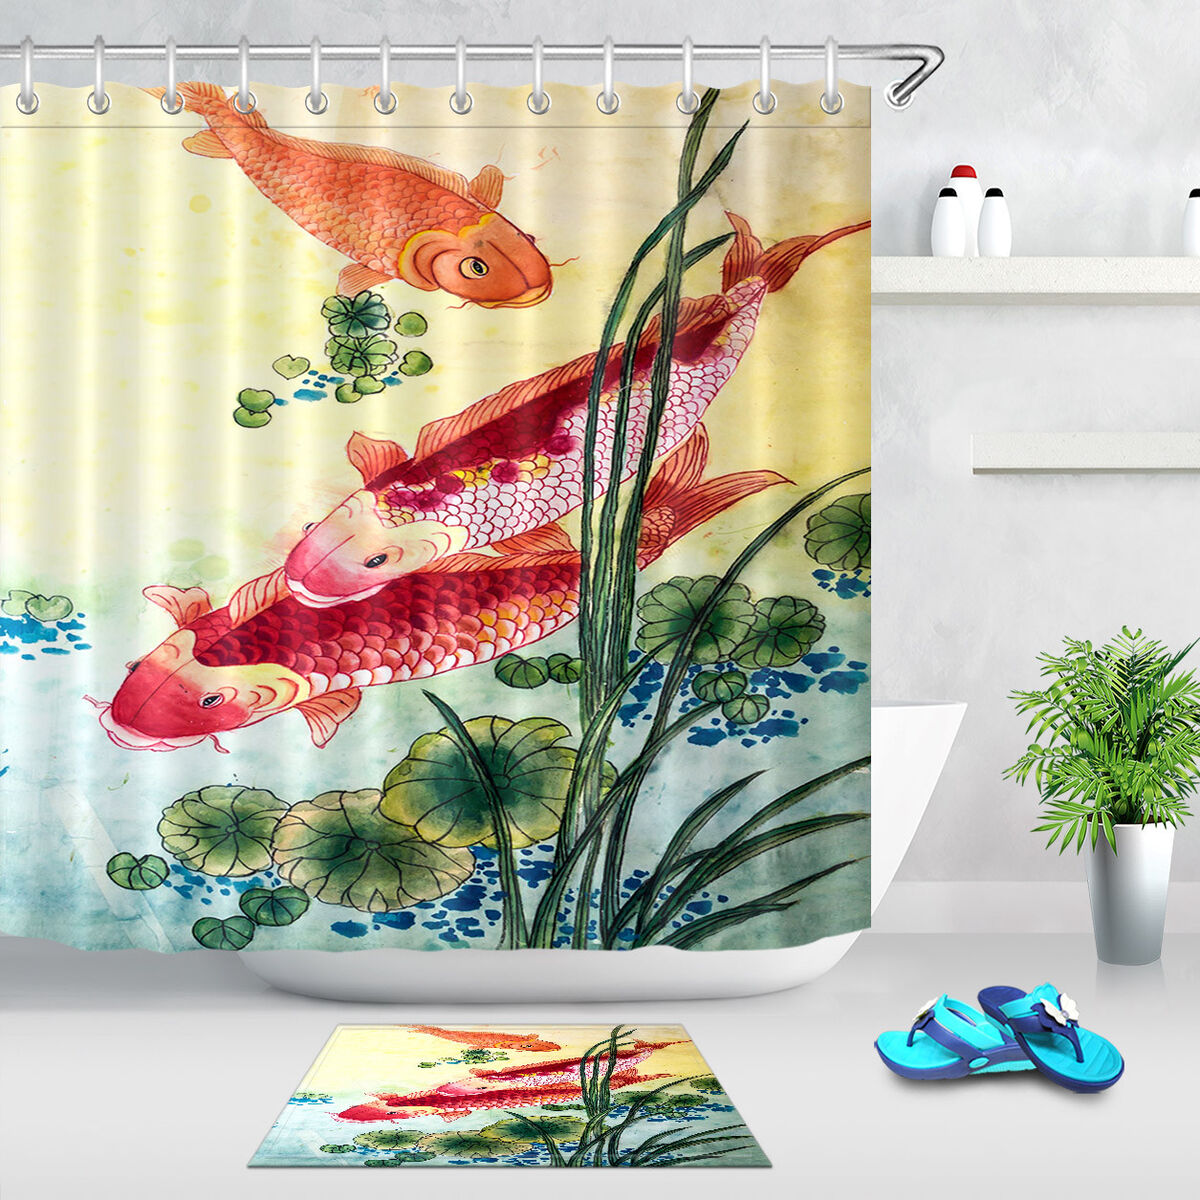 Koi Fish Play In Lotus Waterproof Fabric Shower Curtain Set